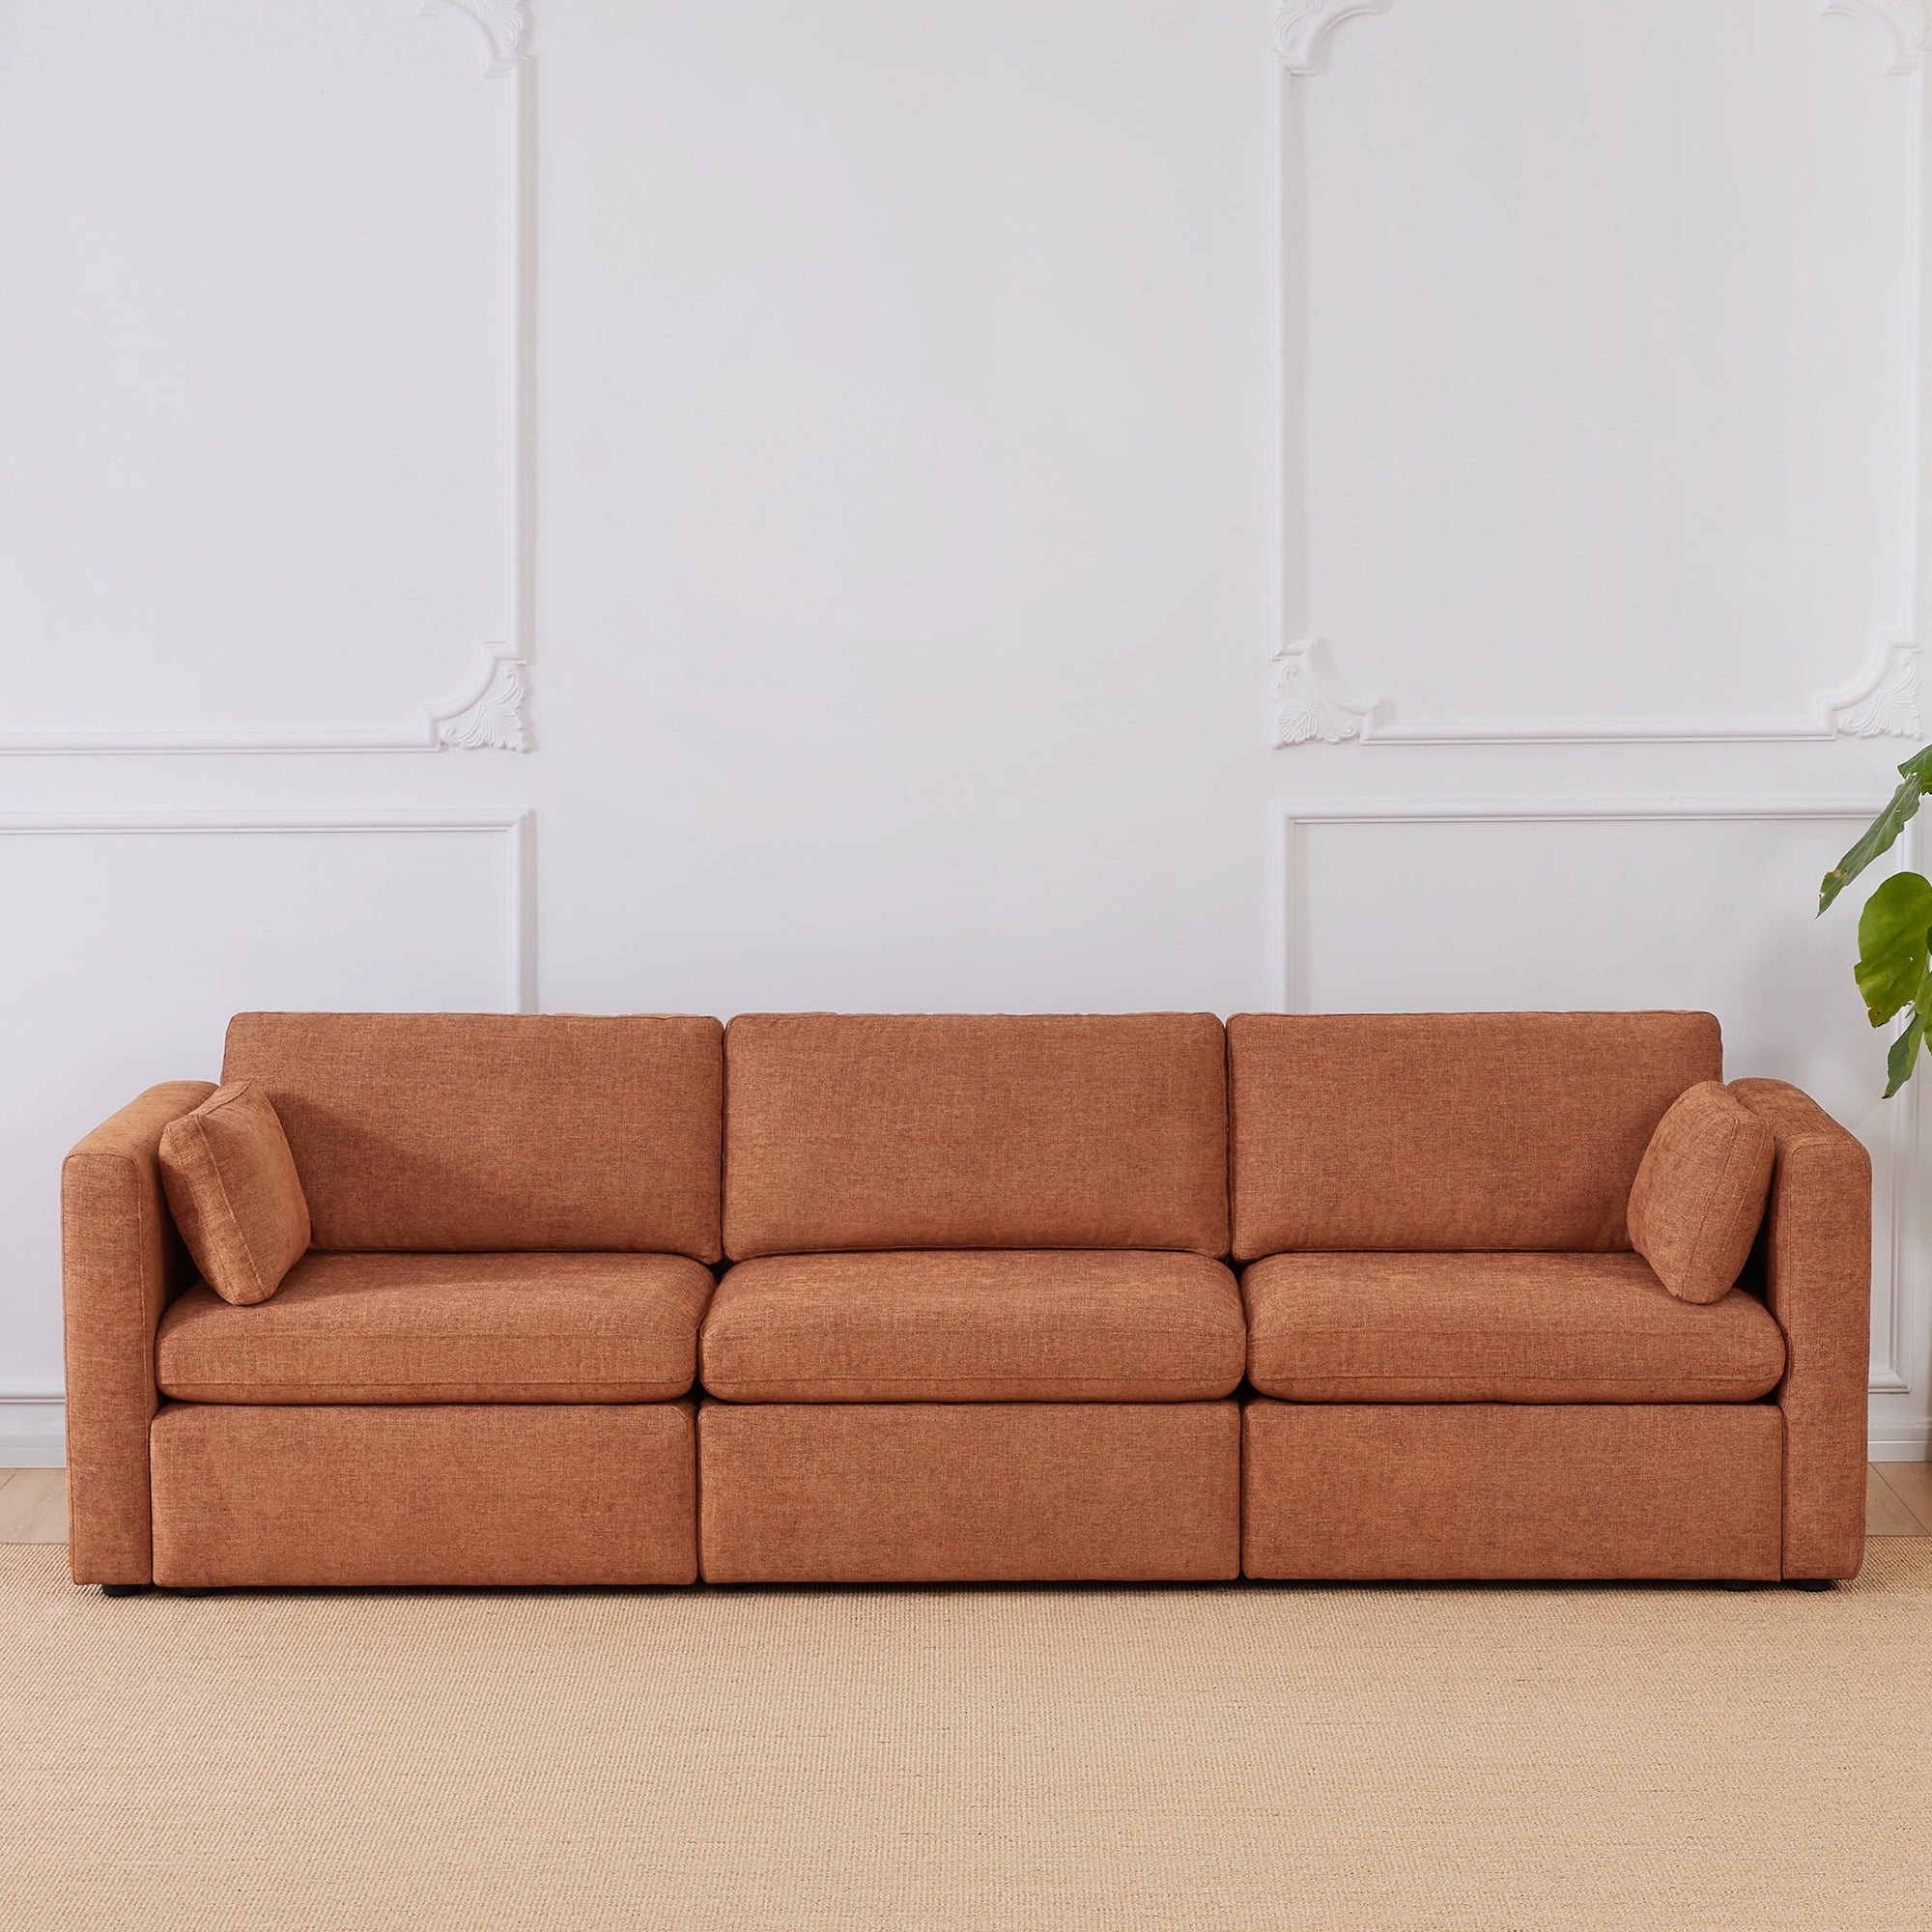 CHITA Oversized Modular Sectional Sofa Set Extra LargeConvertible ...